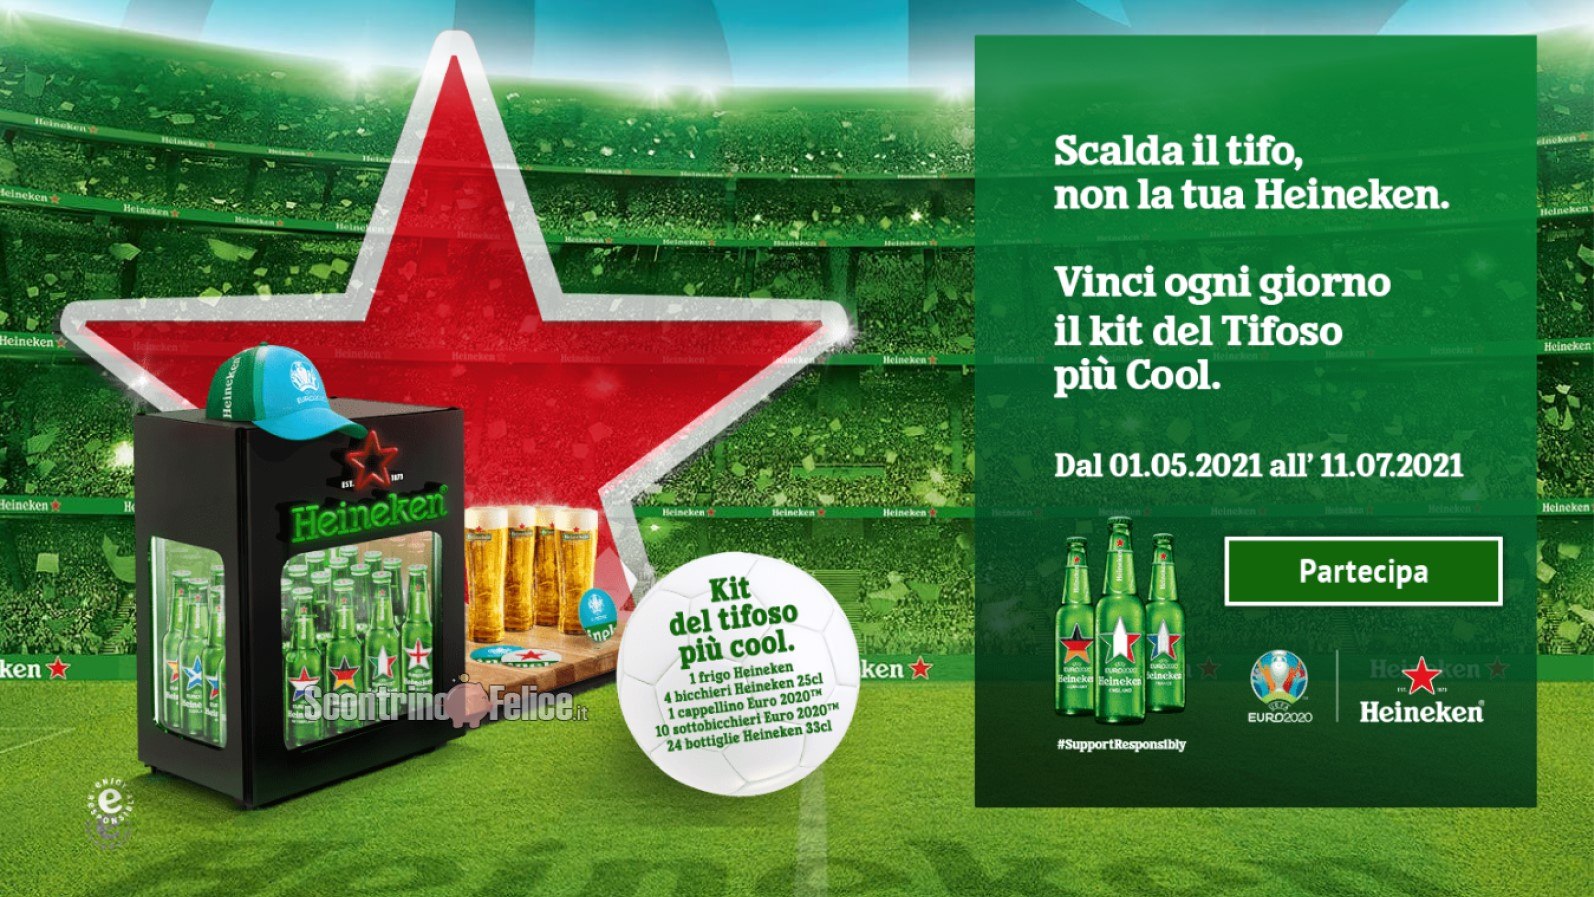 Concorso Heineken vinci il kit del tifoso